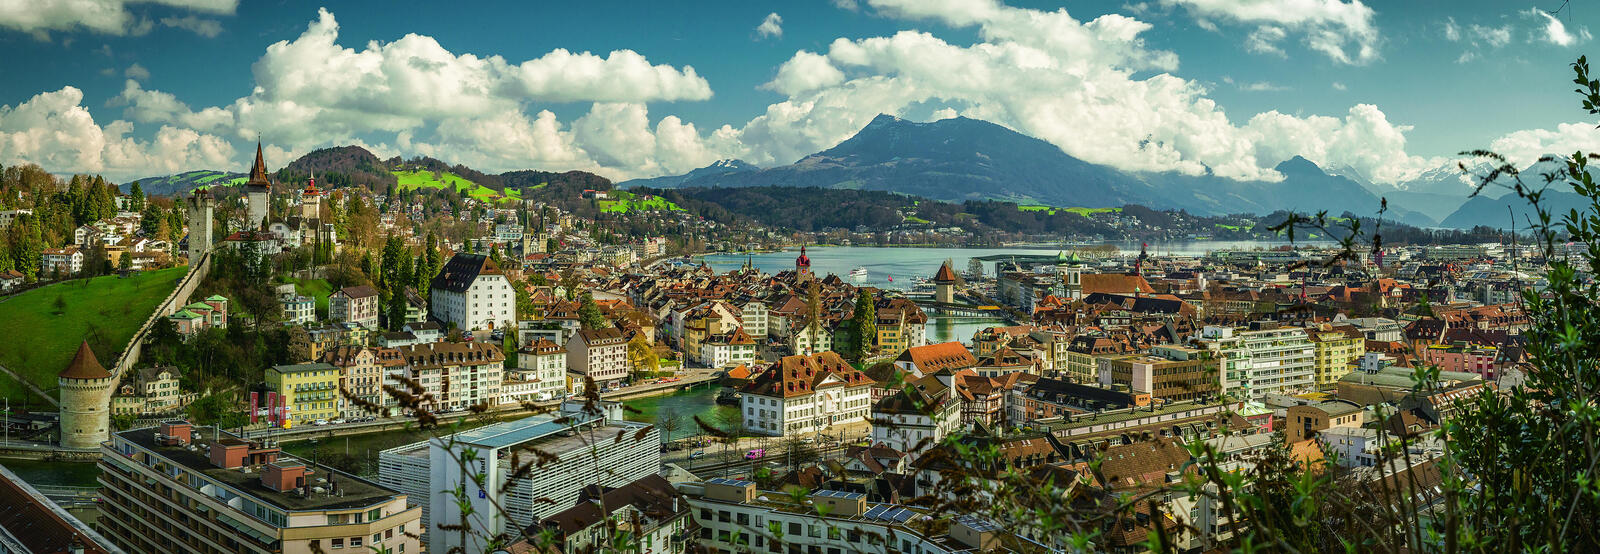 Обои Panorama Lucerne Switzerland на рабочий стол